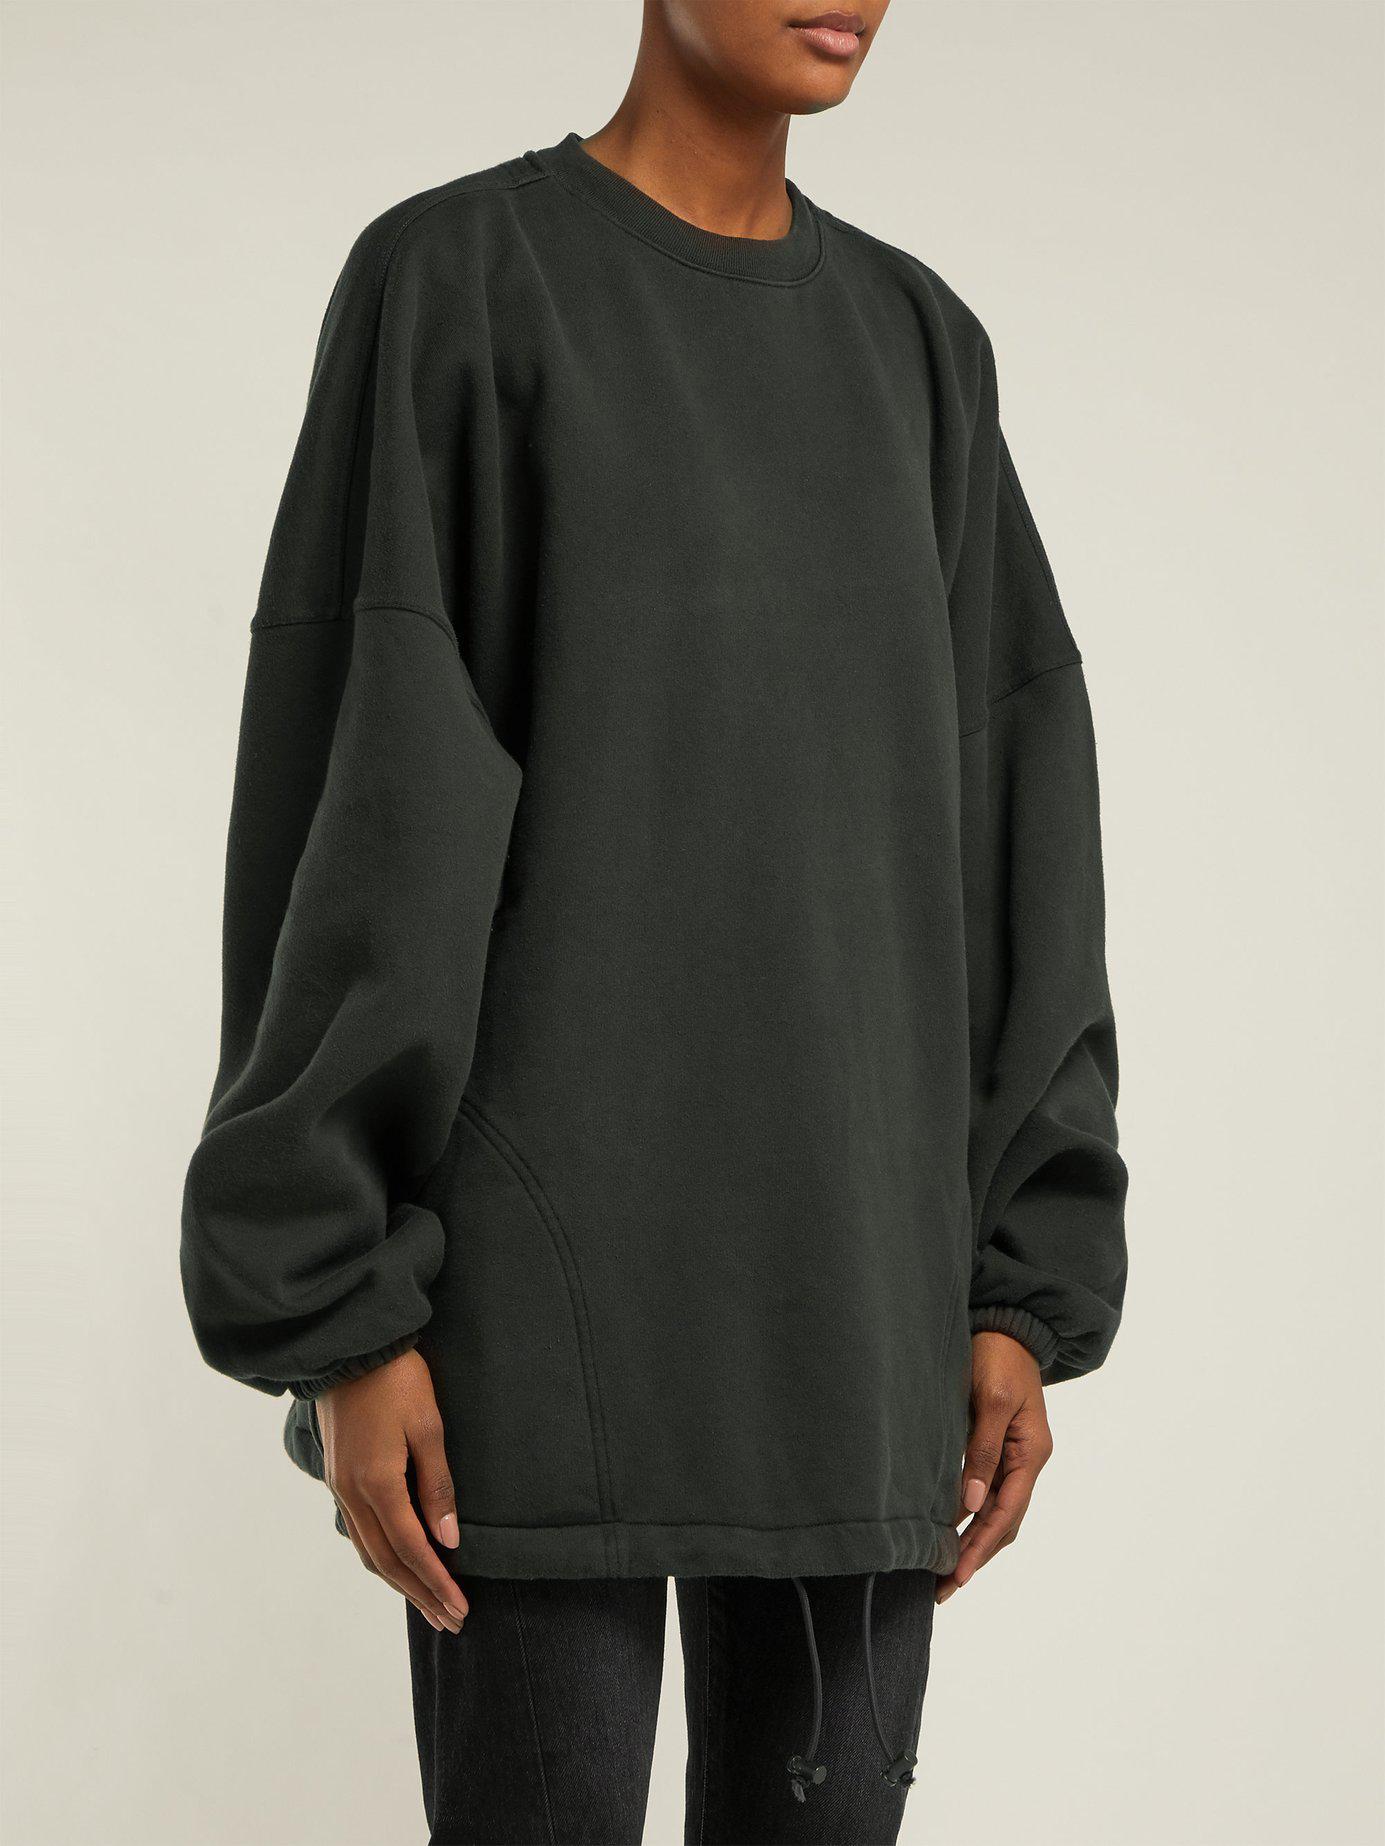 Balenciaga Oversized Cotton Blend Sweatshirt in Black - Lyst